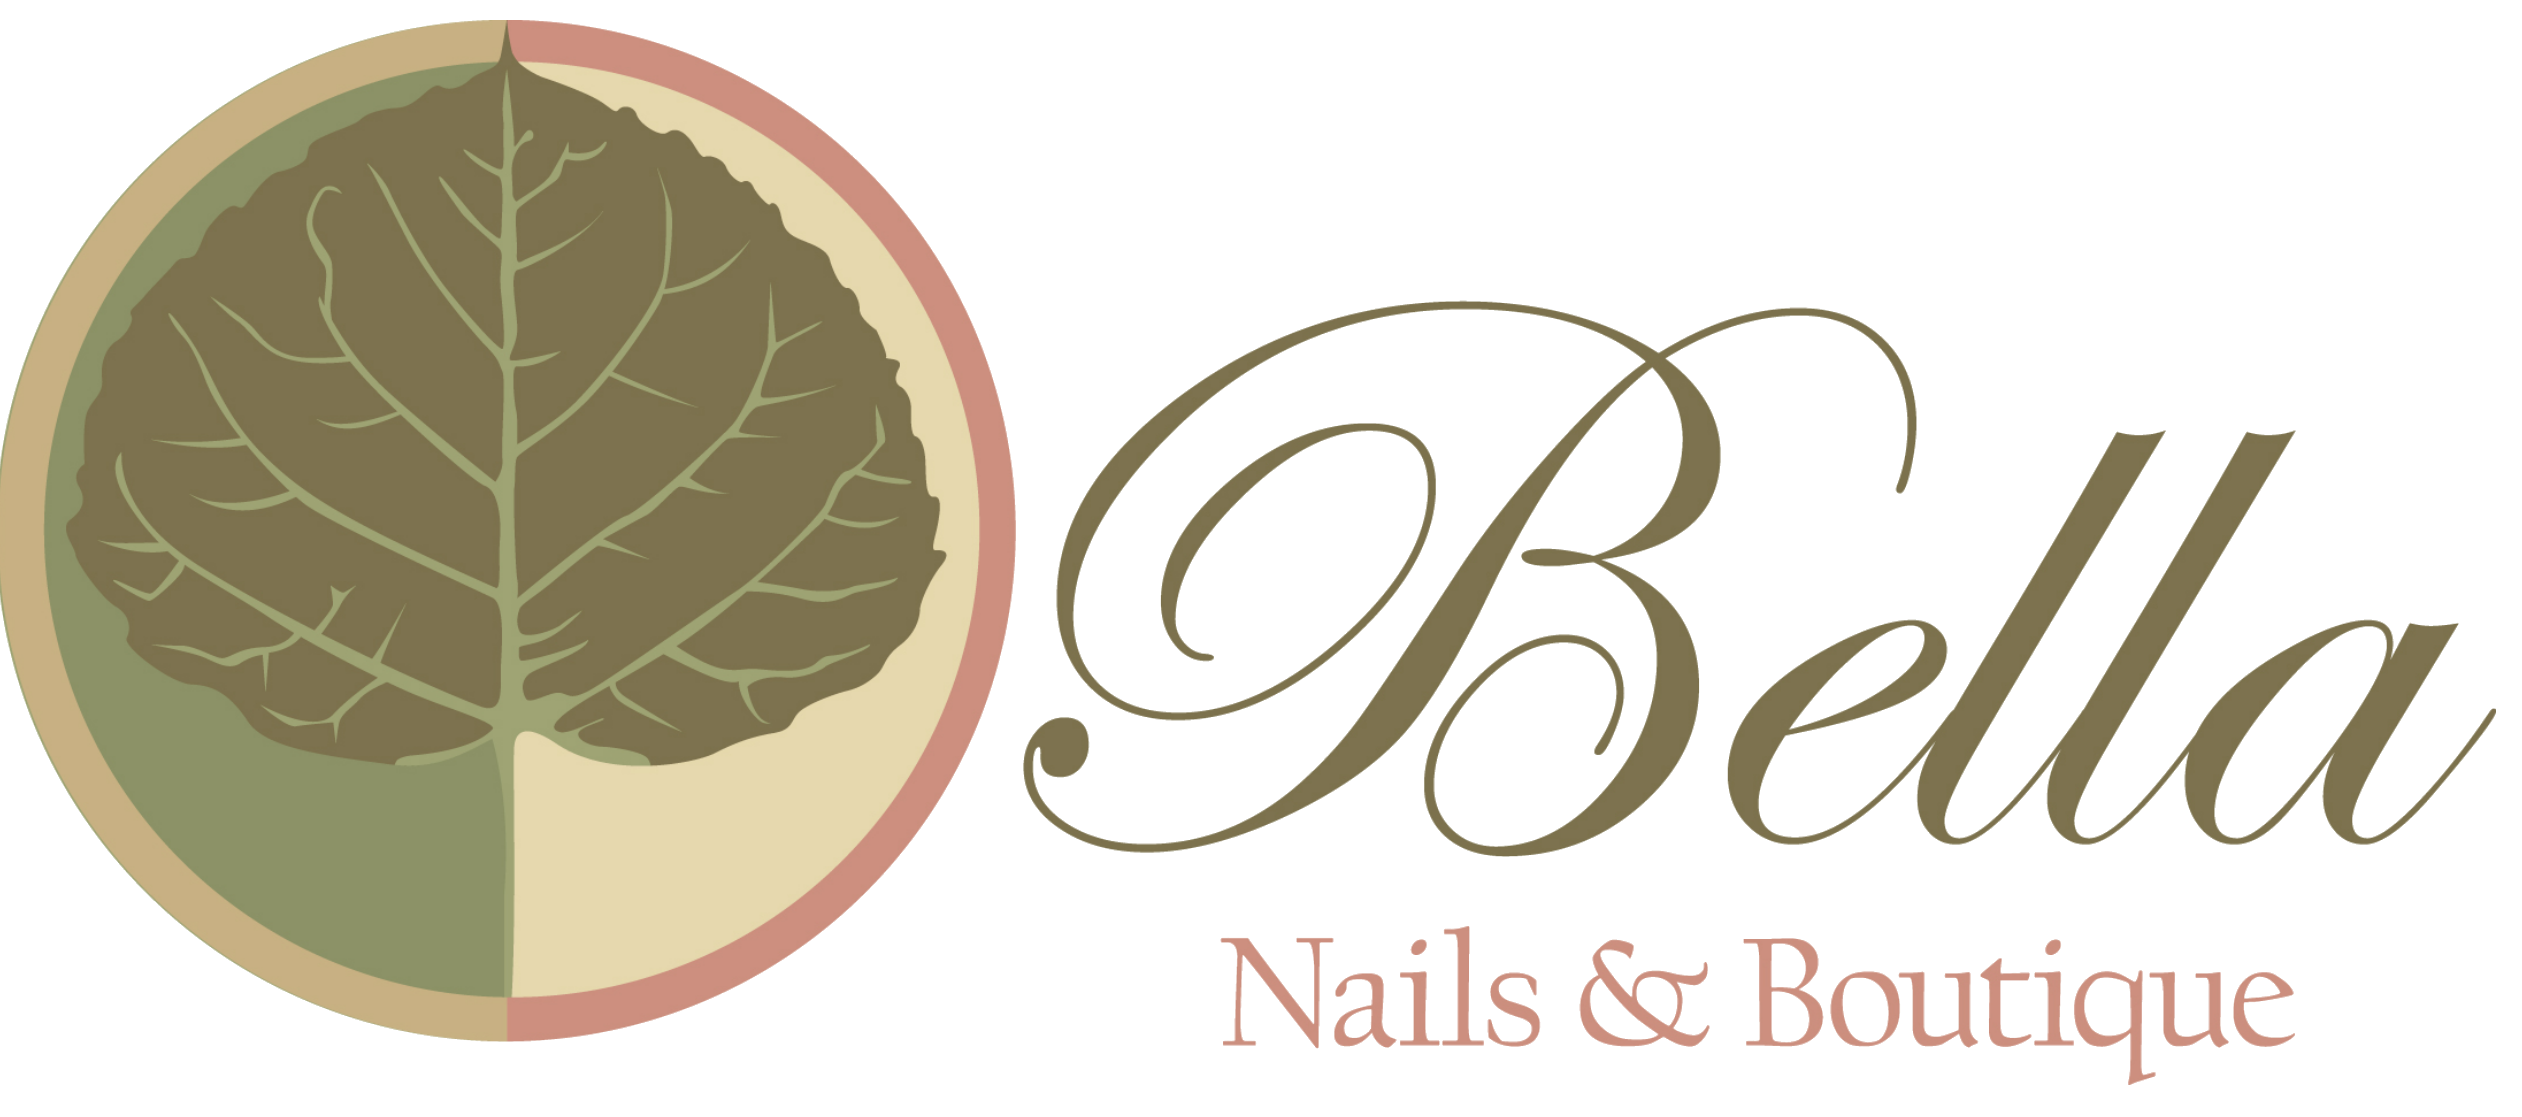 manicure clipart nail logo